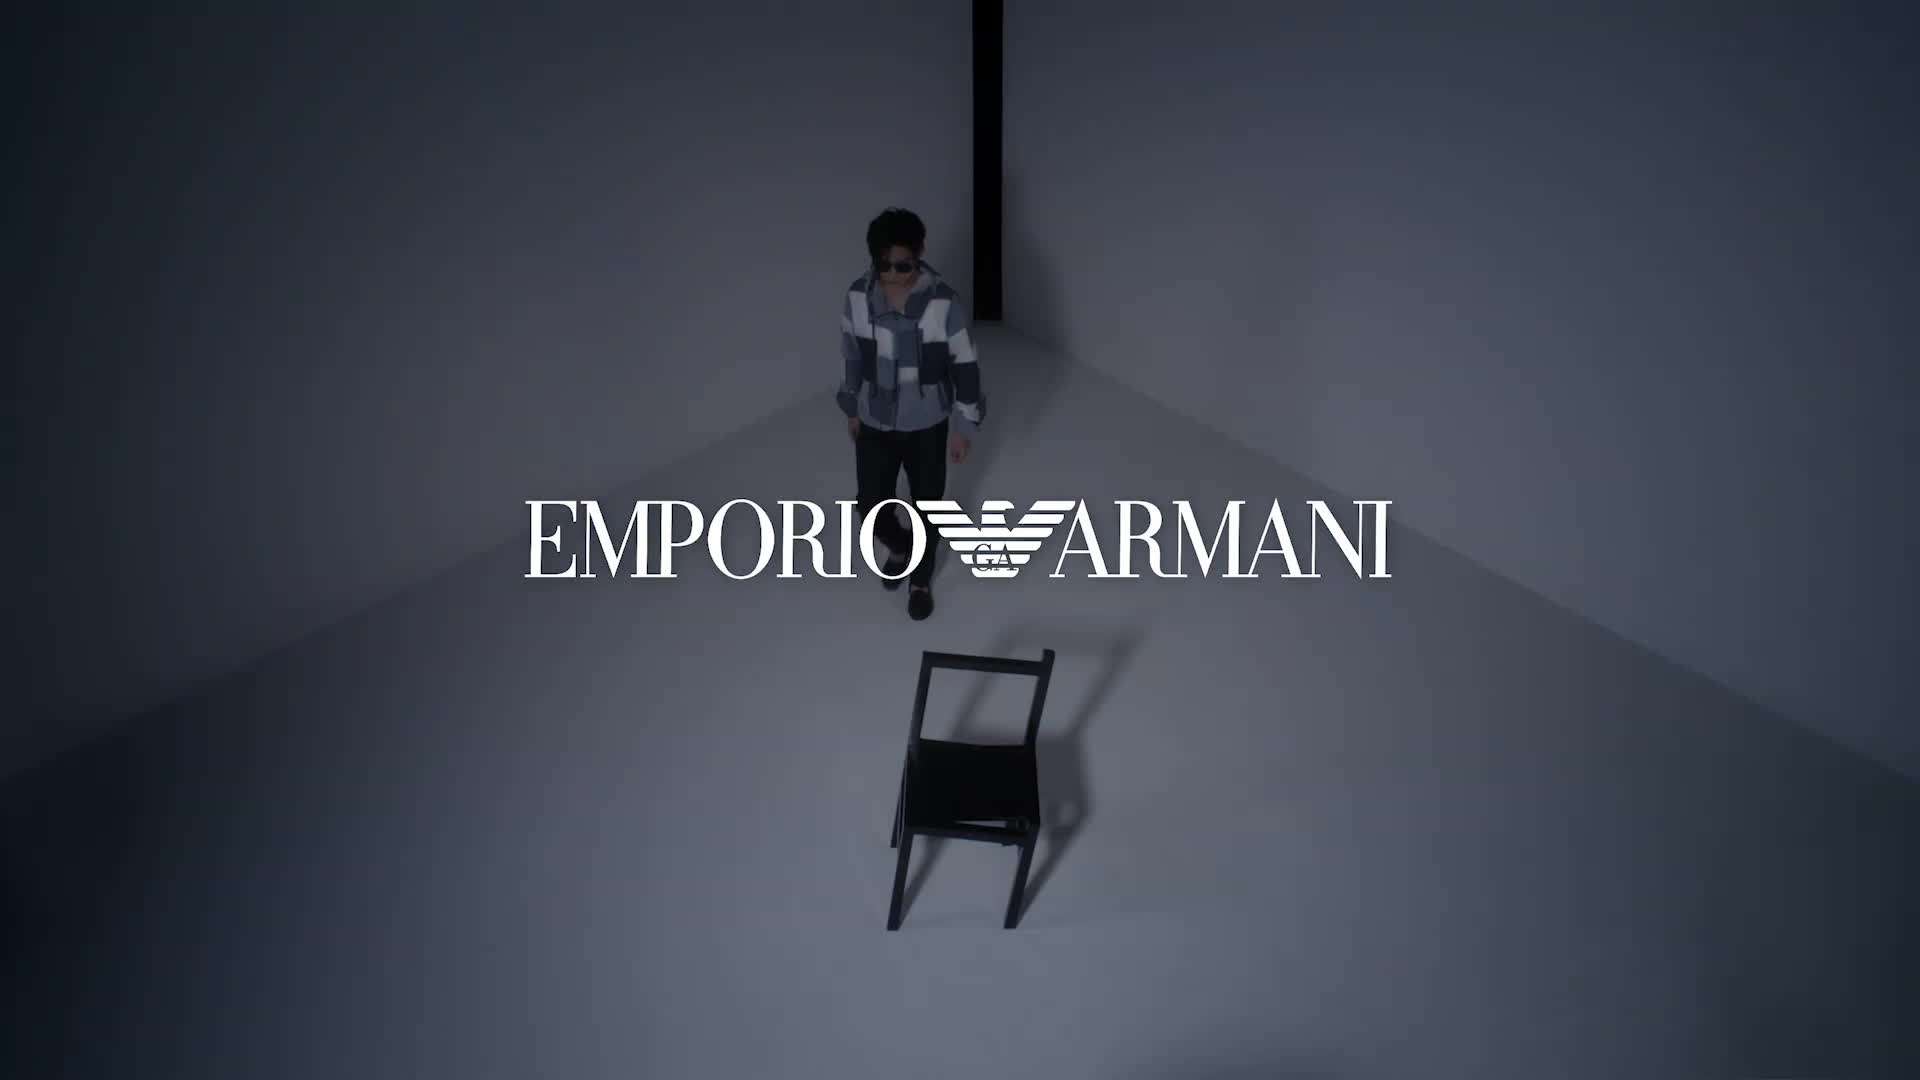 Emporio Armani 全球形象代言人易烊千玺 - 2022春夏眼镜广告大